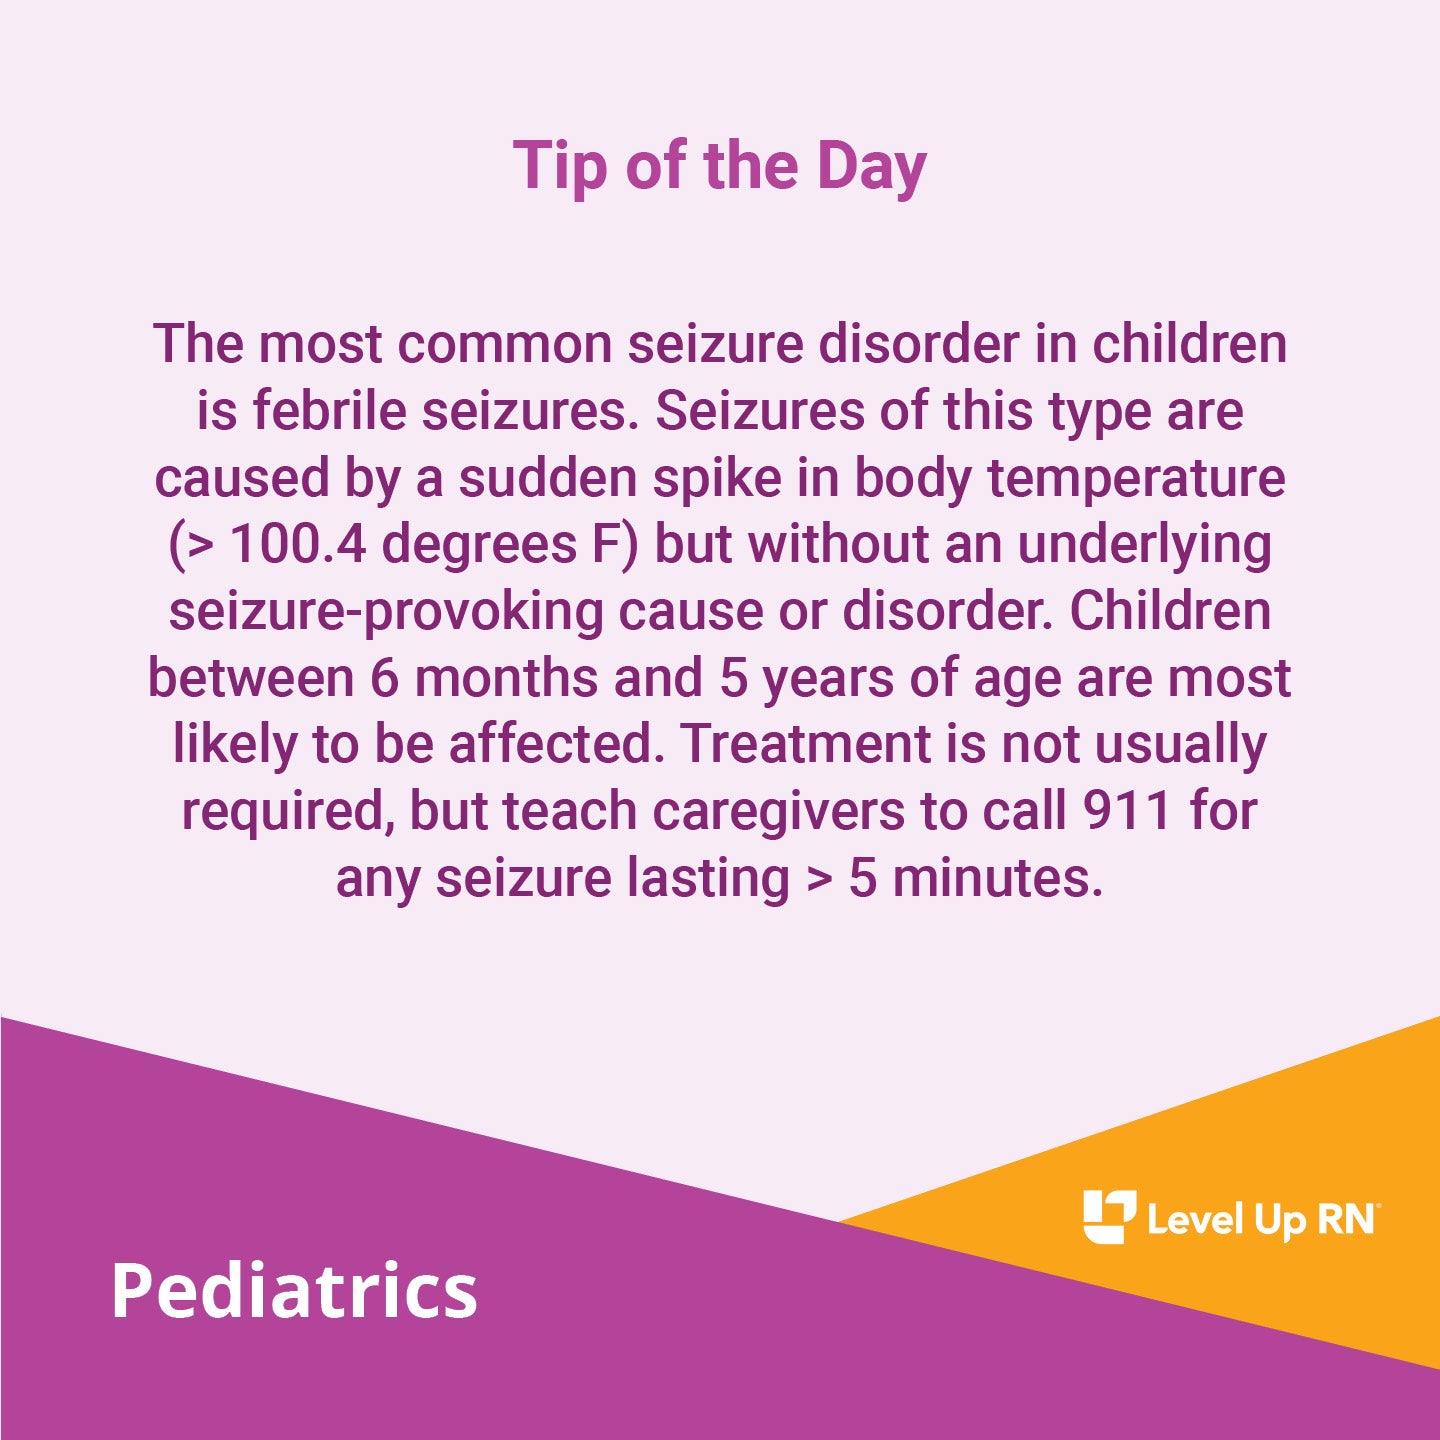 The most common seizure disorder in children is febrile seizures.